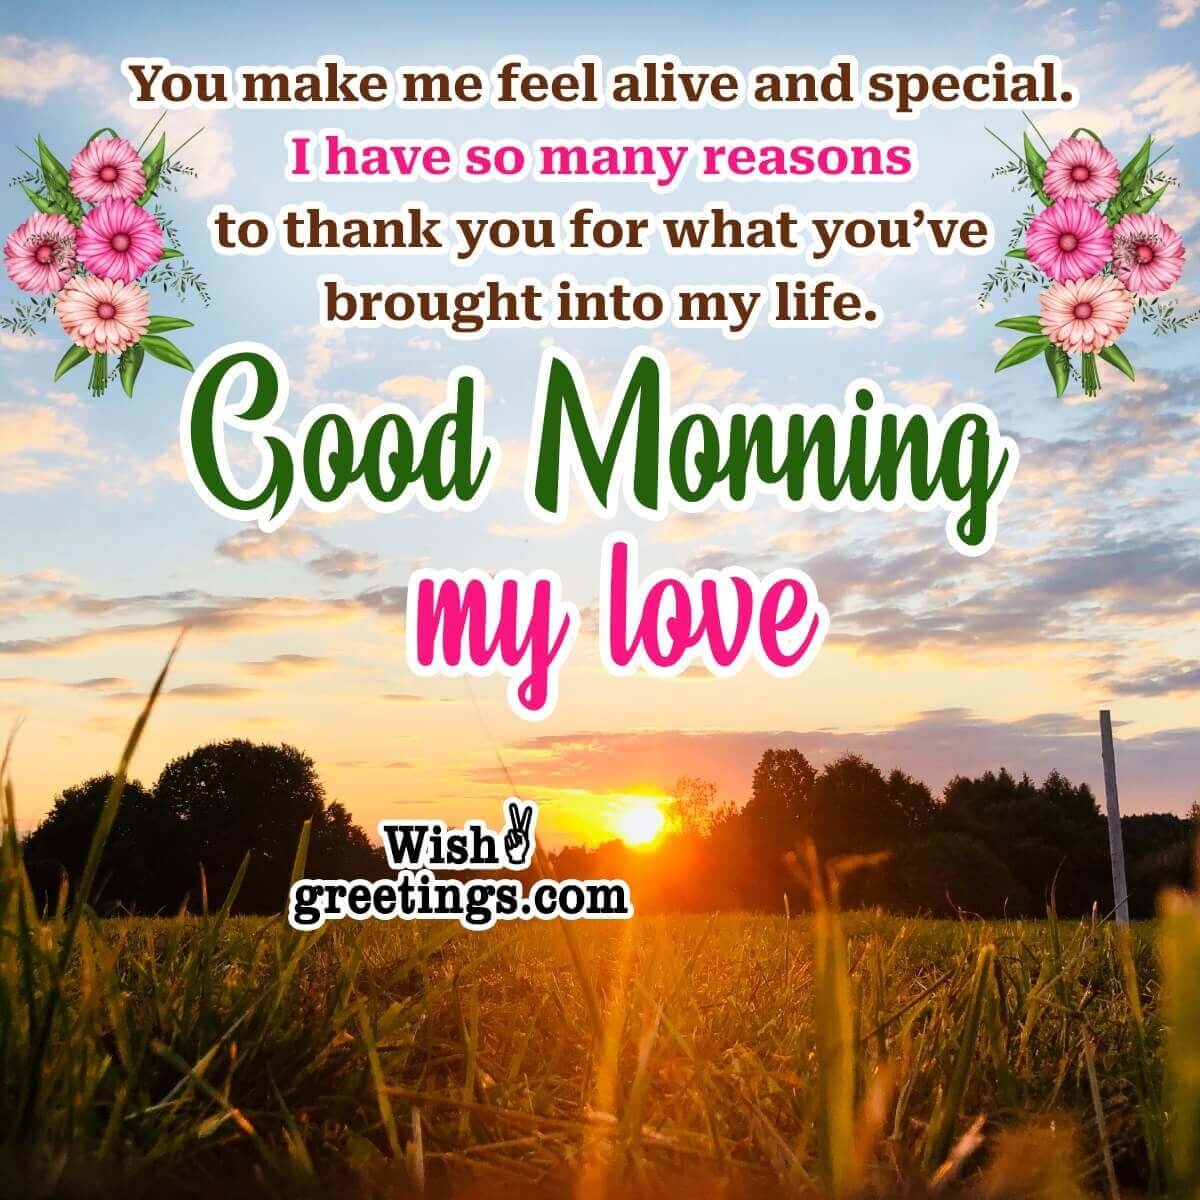 Good Morning My Love, Message Photo